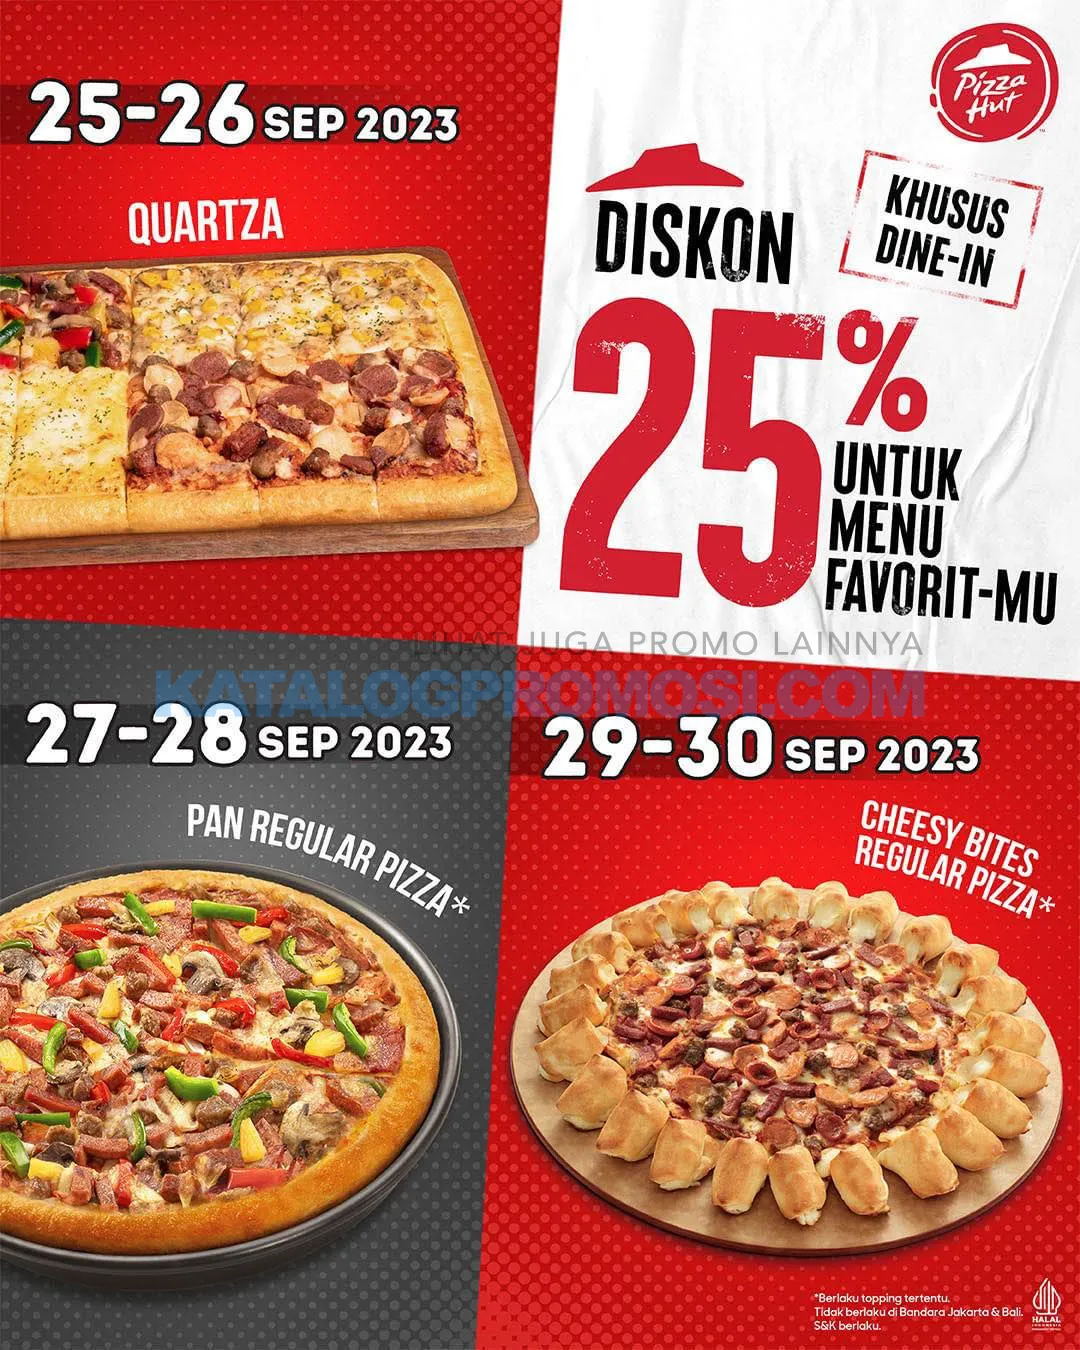 Promo PIZZA HUT - DISKON 25% untuk PIZZA FAVORIT